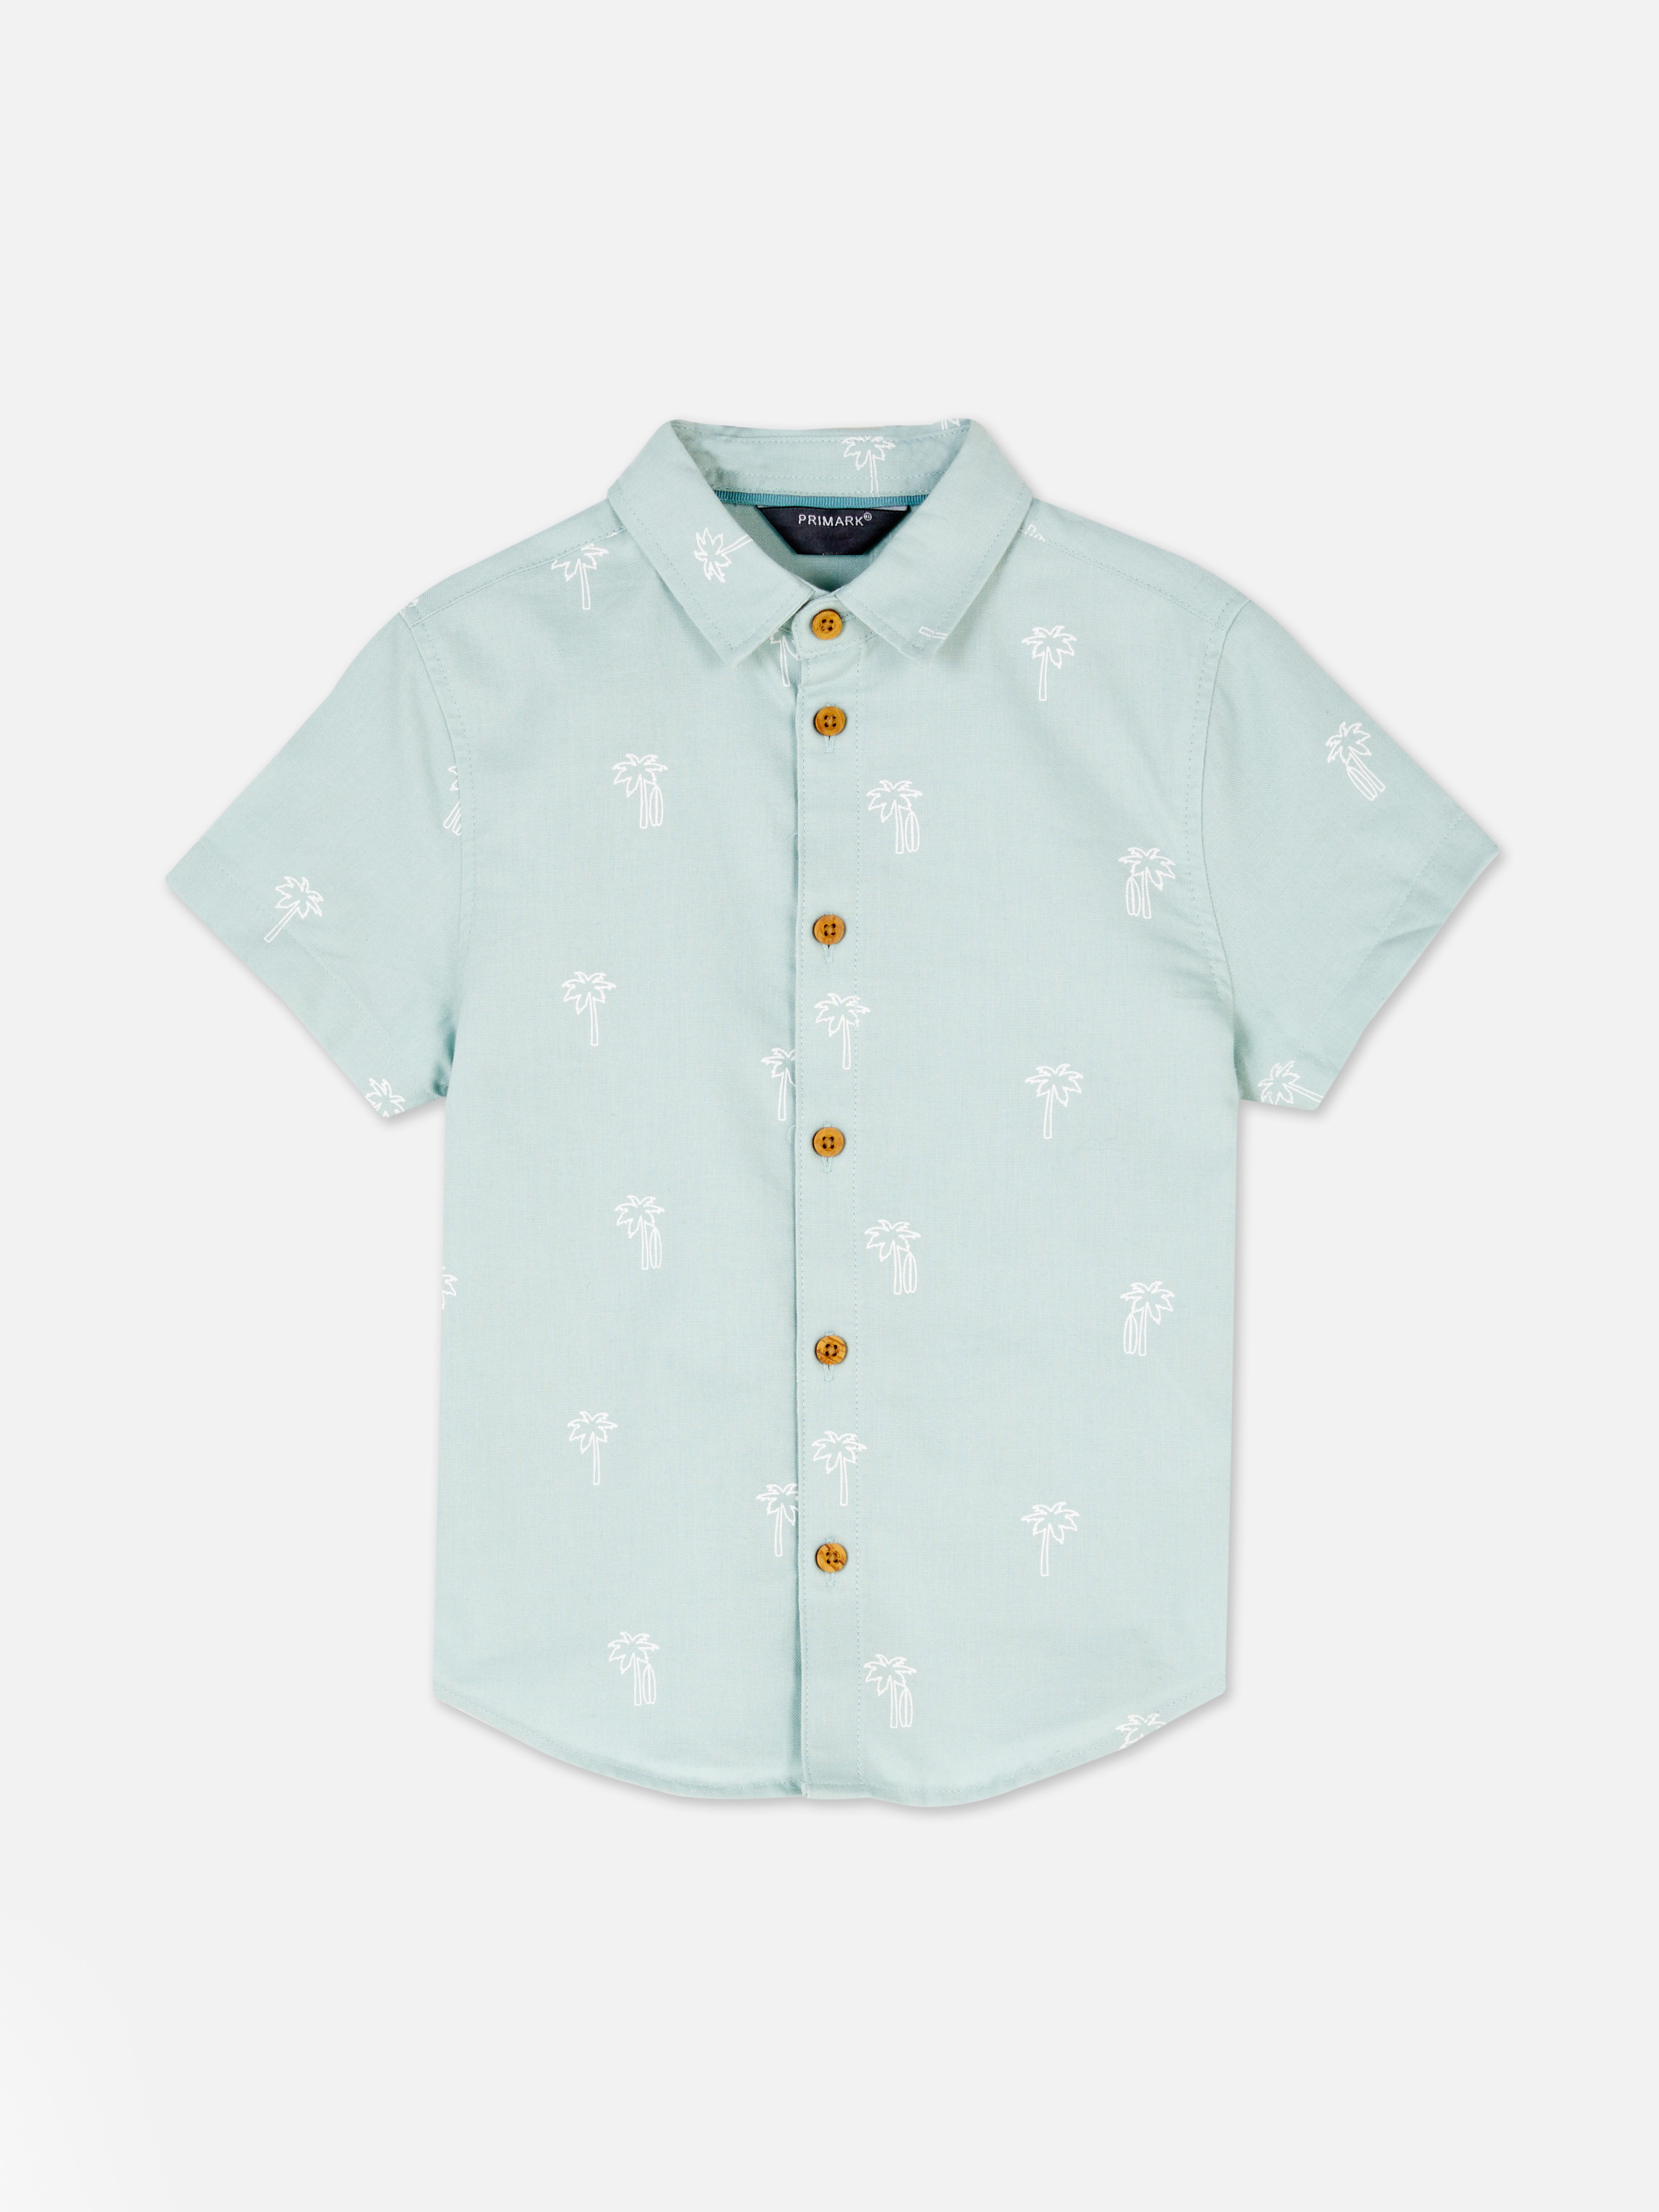 Palm Tree Oxford Shirt